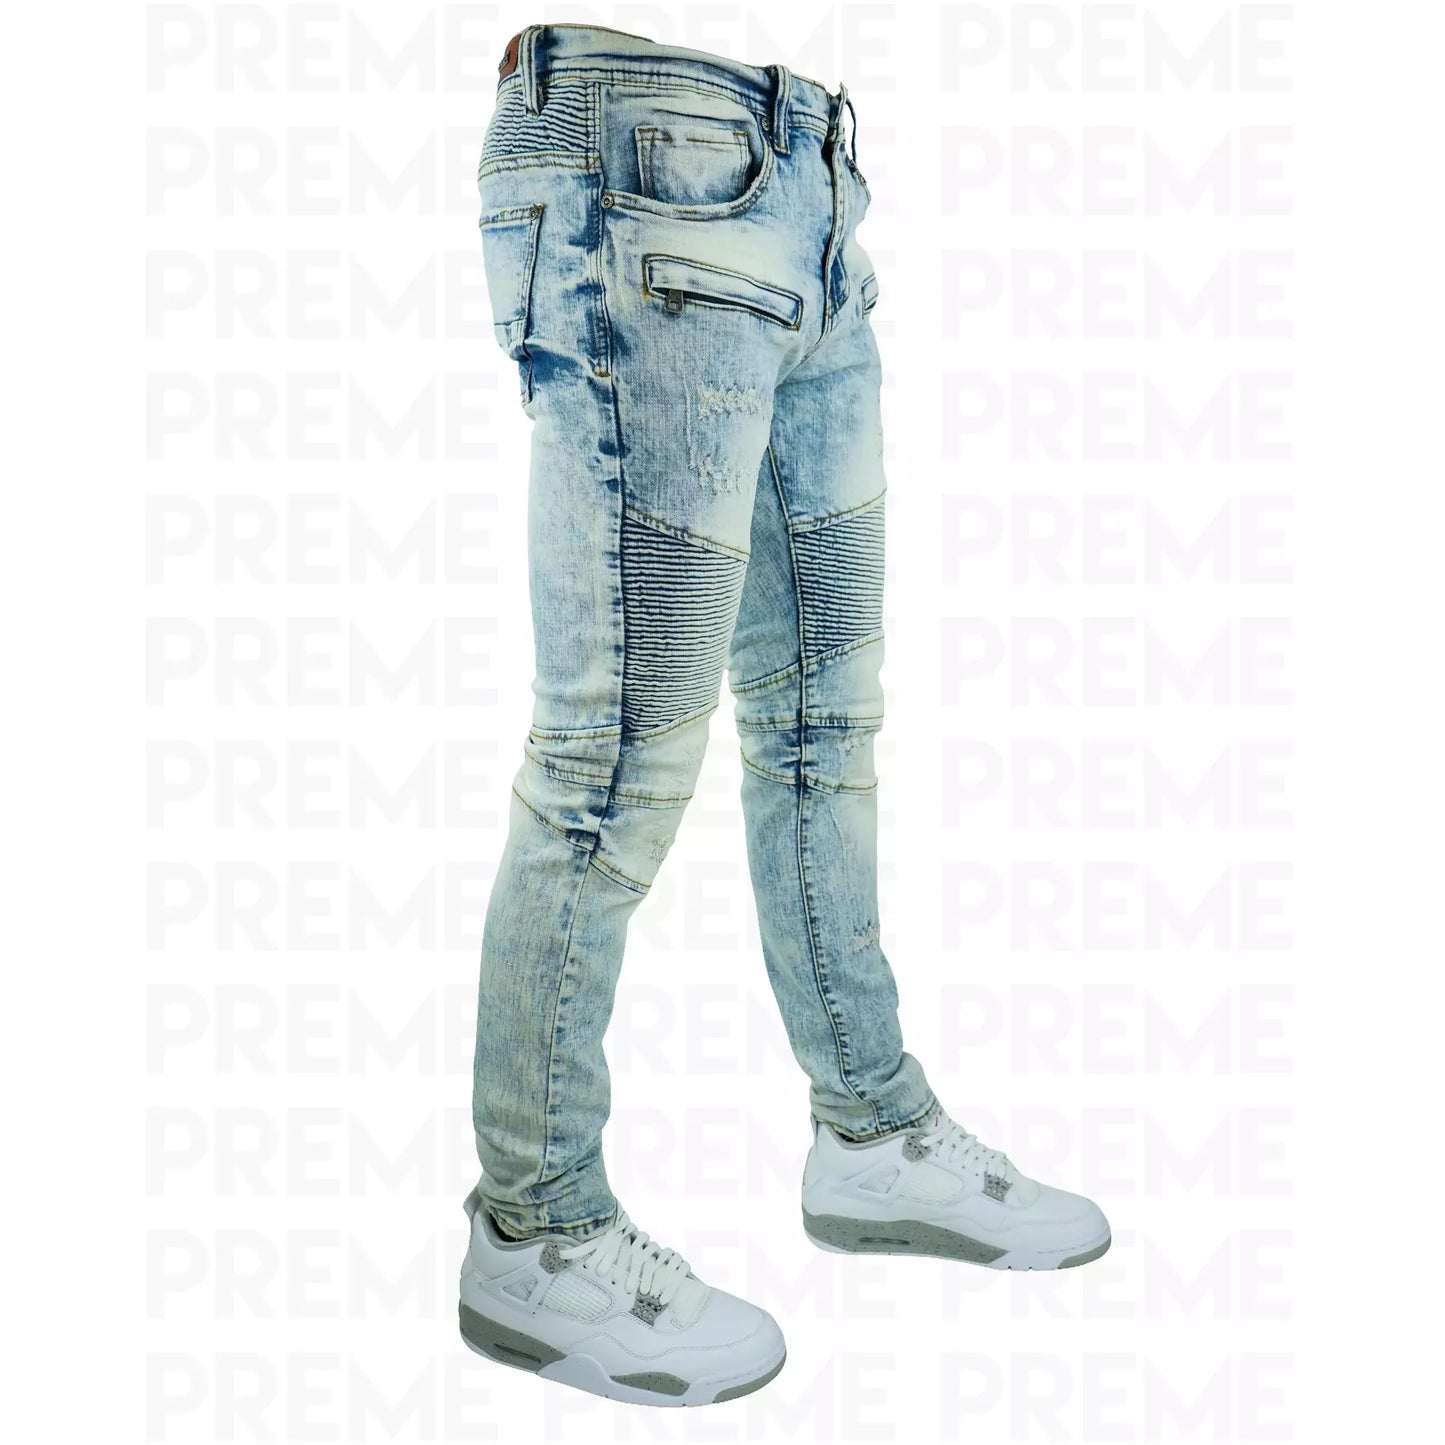 Preme Indigo Blue Biker Denim Jeans (PR-WB-873)